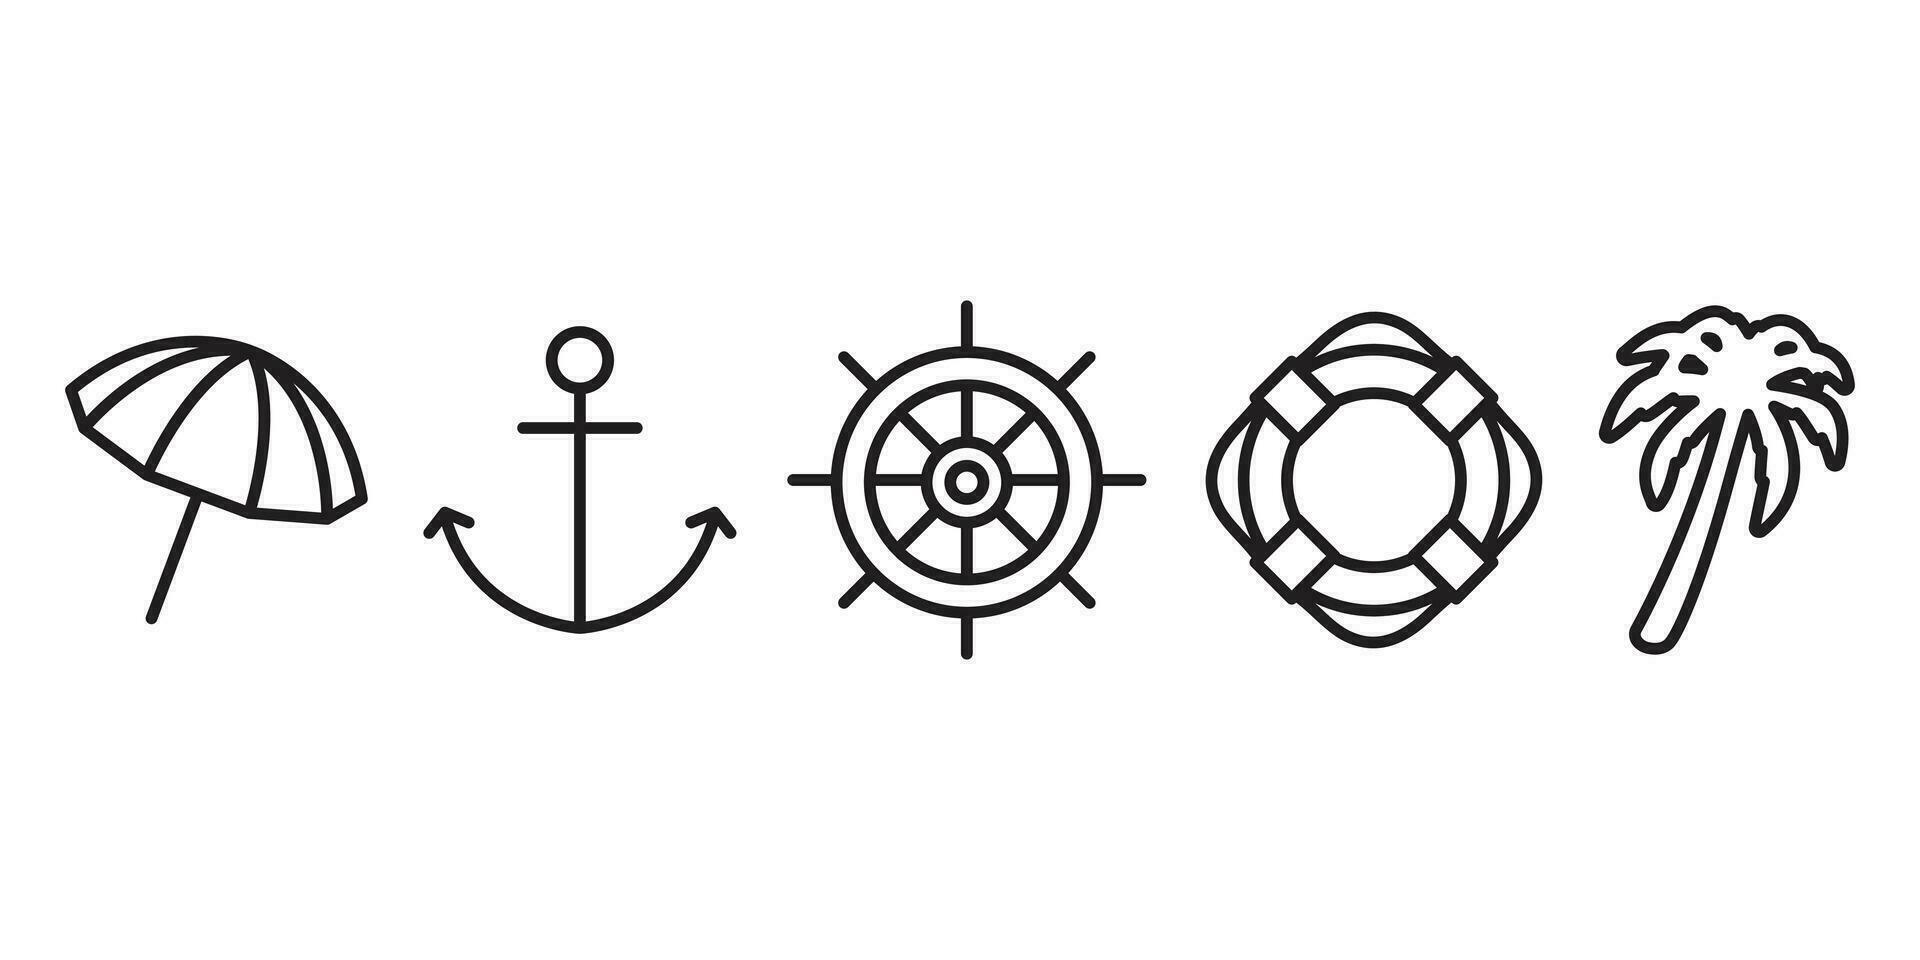 Anker Vektor Boot Helm Schwimmen Ring Symbol Logo Symbol Regenschirm Strand Palme Baum Kokosnuss Pirat maritim nautisch Ozean Meer Illustration